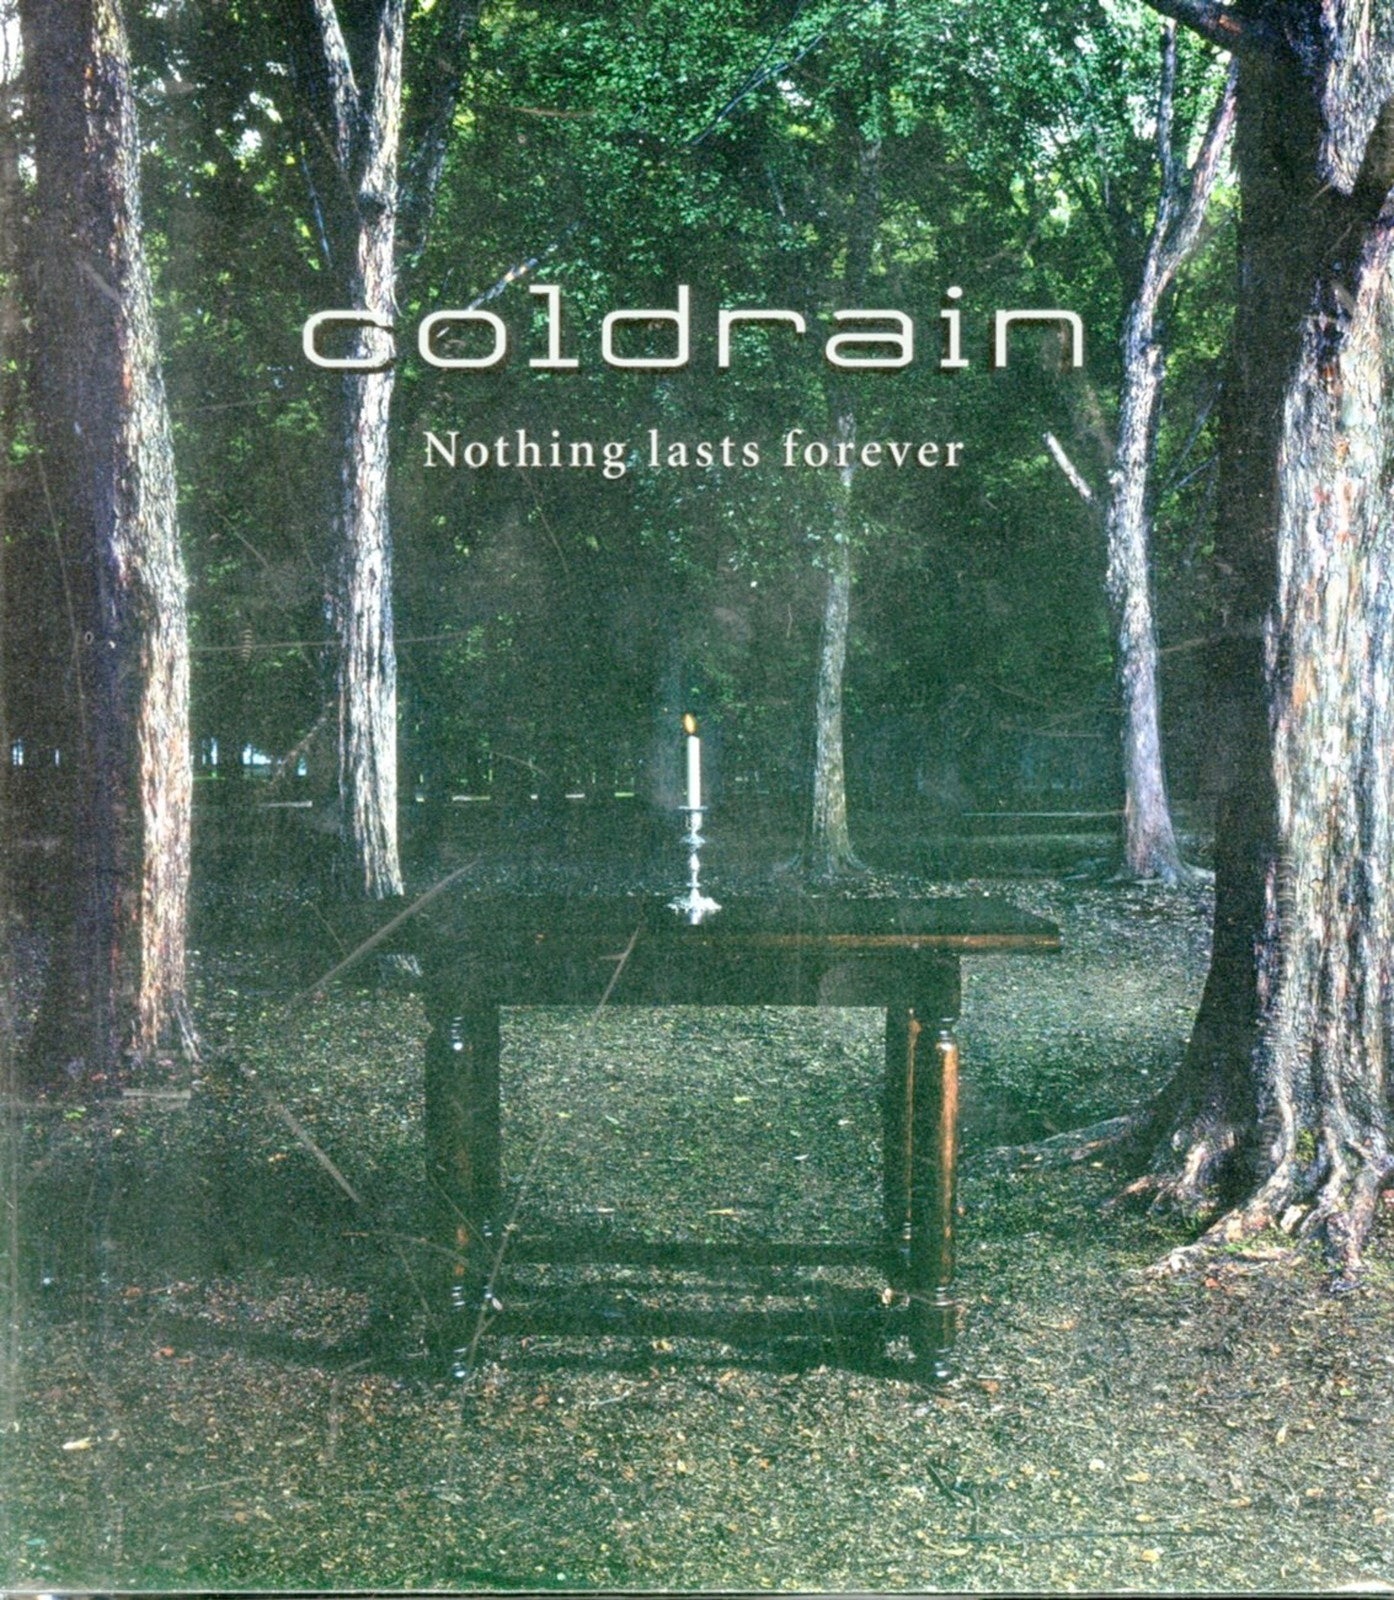 Coldrain - Nothing Lasts Forever - Japan CD – CDs Vinyl Japan 